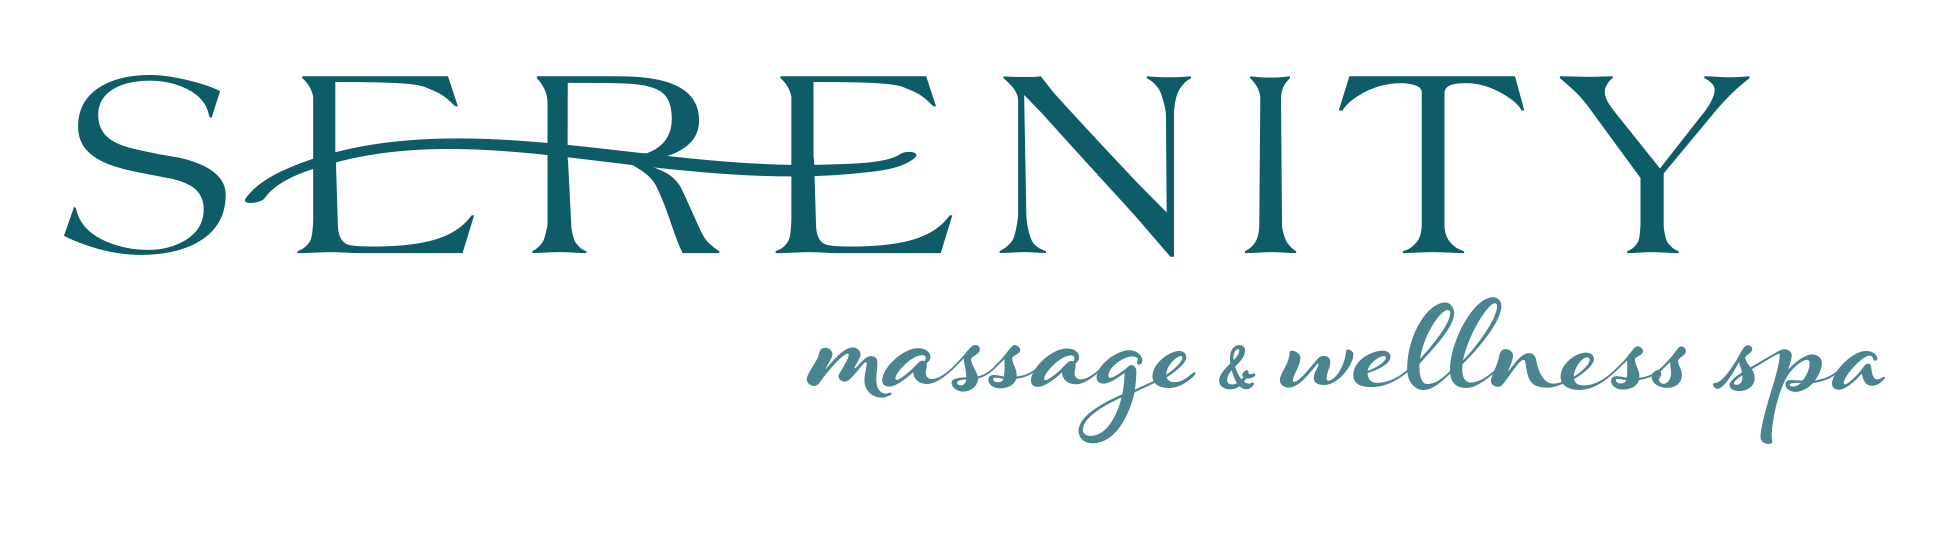 Serenity Massage & Wellness Spa